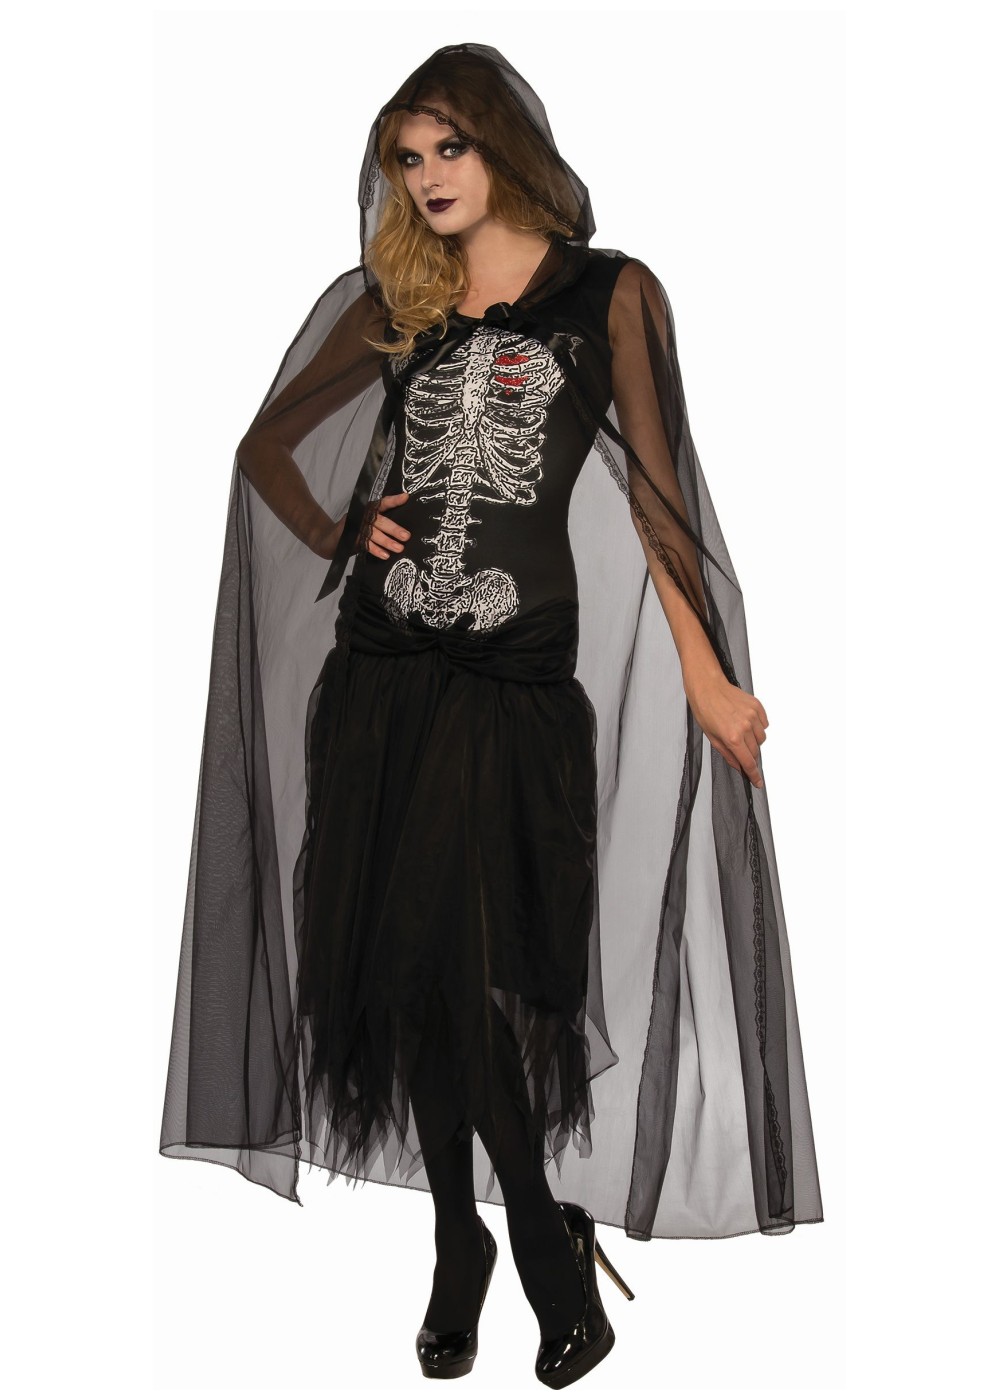 Death Women Costume